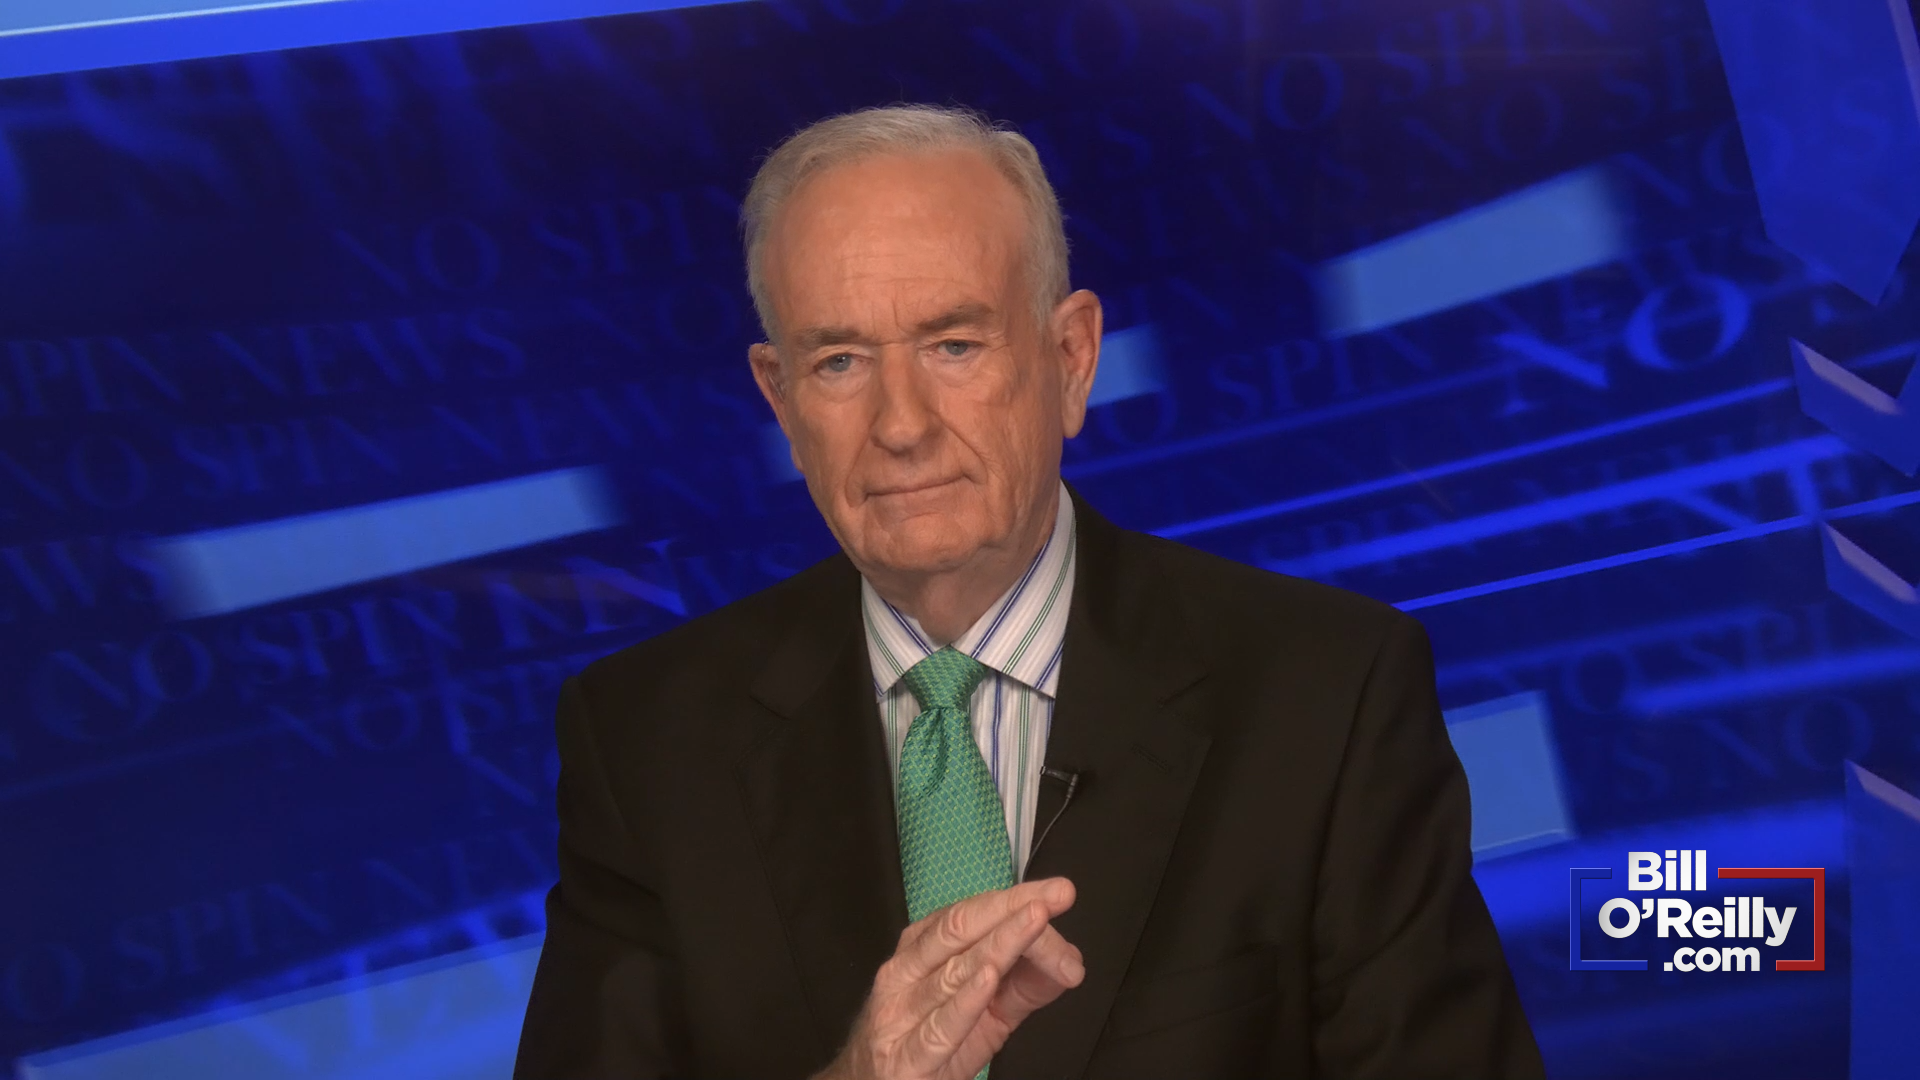 O'Reilly: 'Joe Biden is the Most Radical Left President by Far'